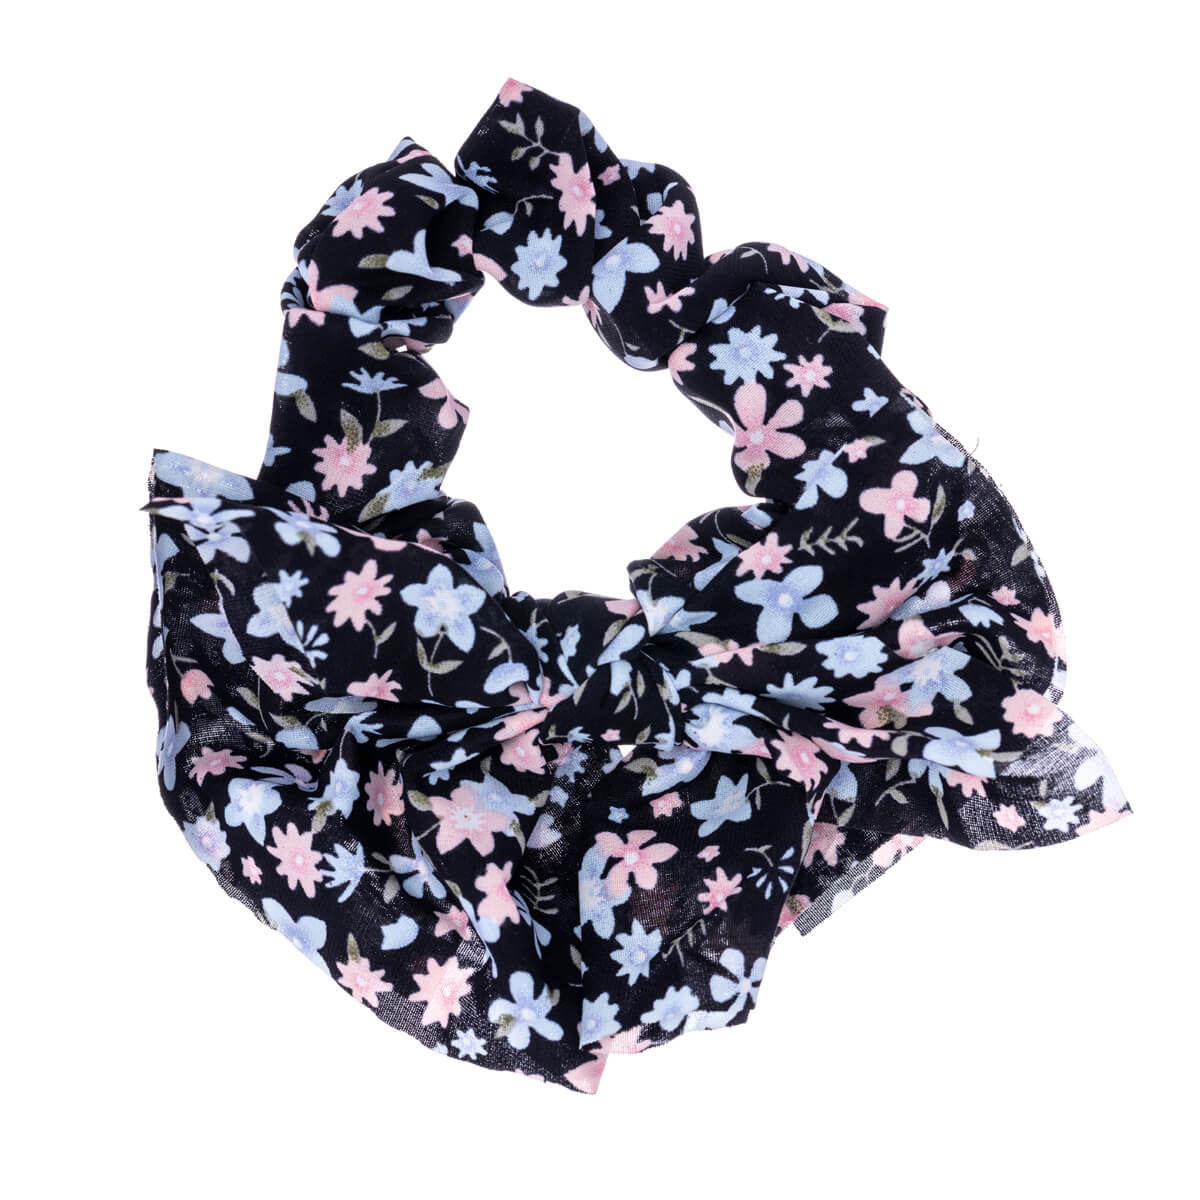 Bow tie scrunchie hairpin floral pattern